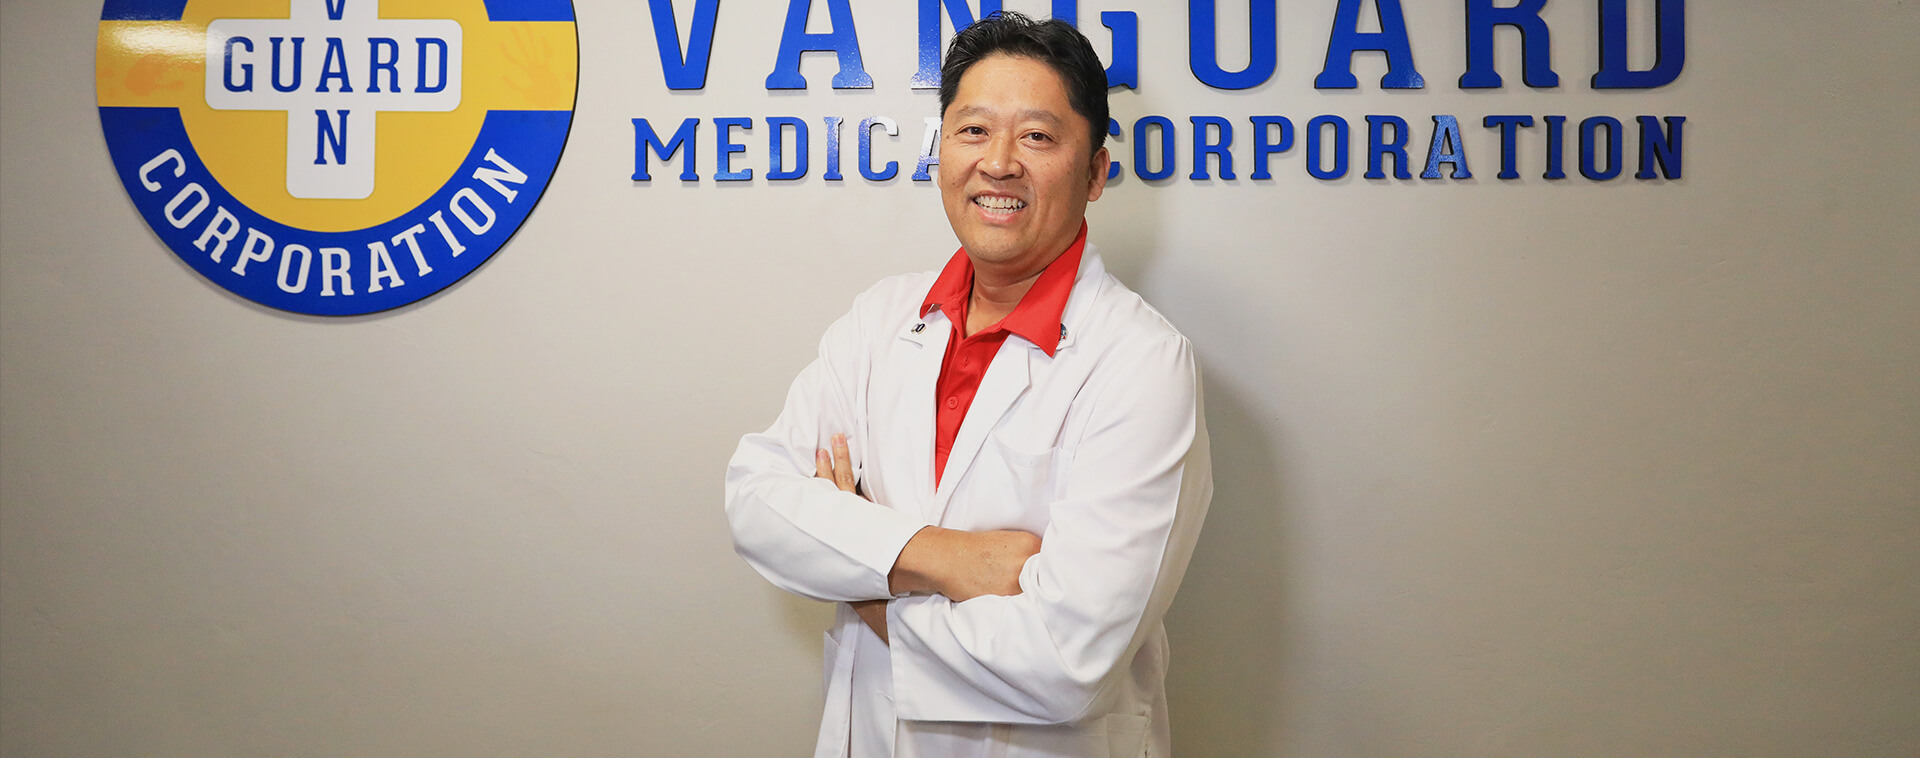 Vanguard Medical Corporation